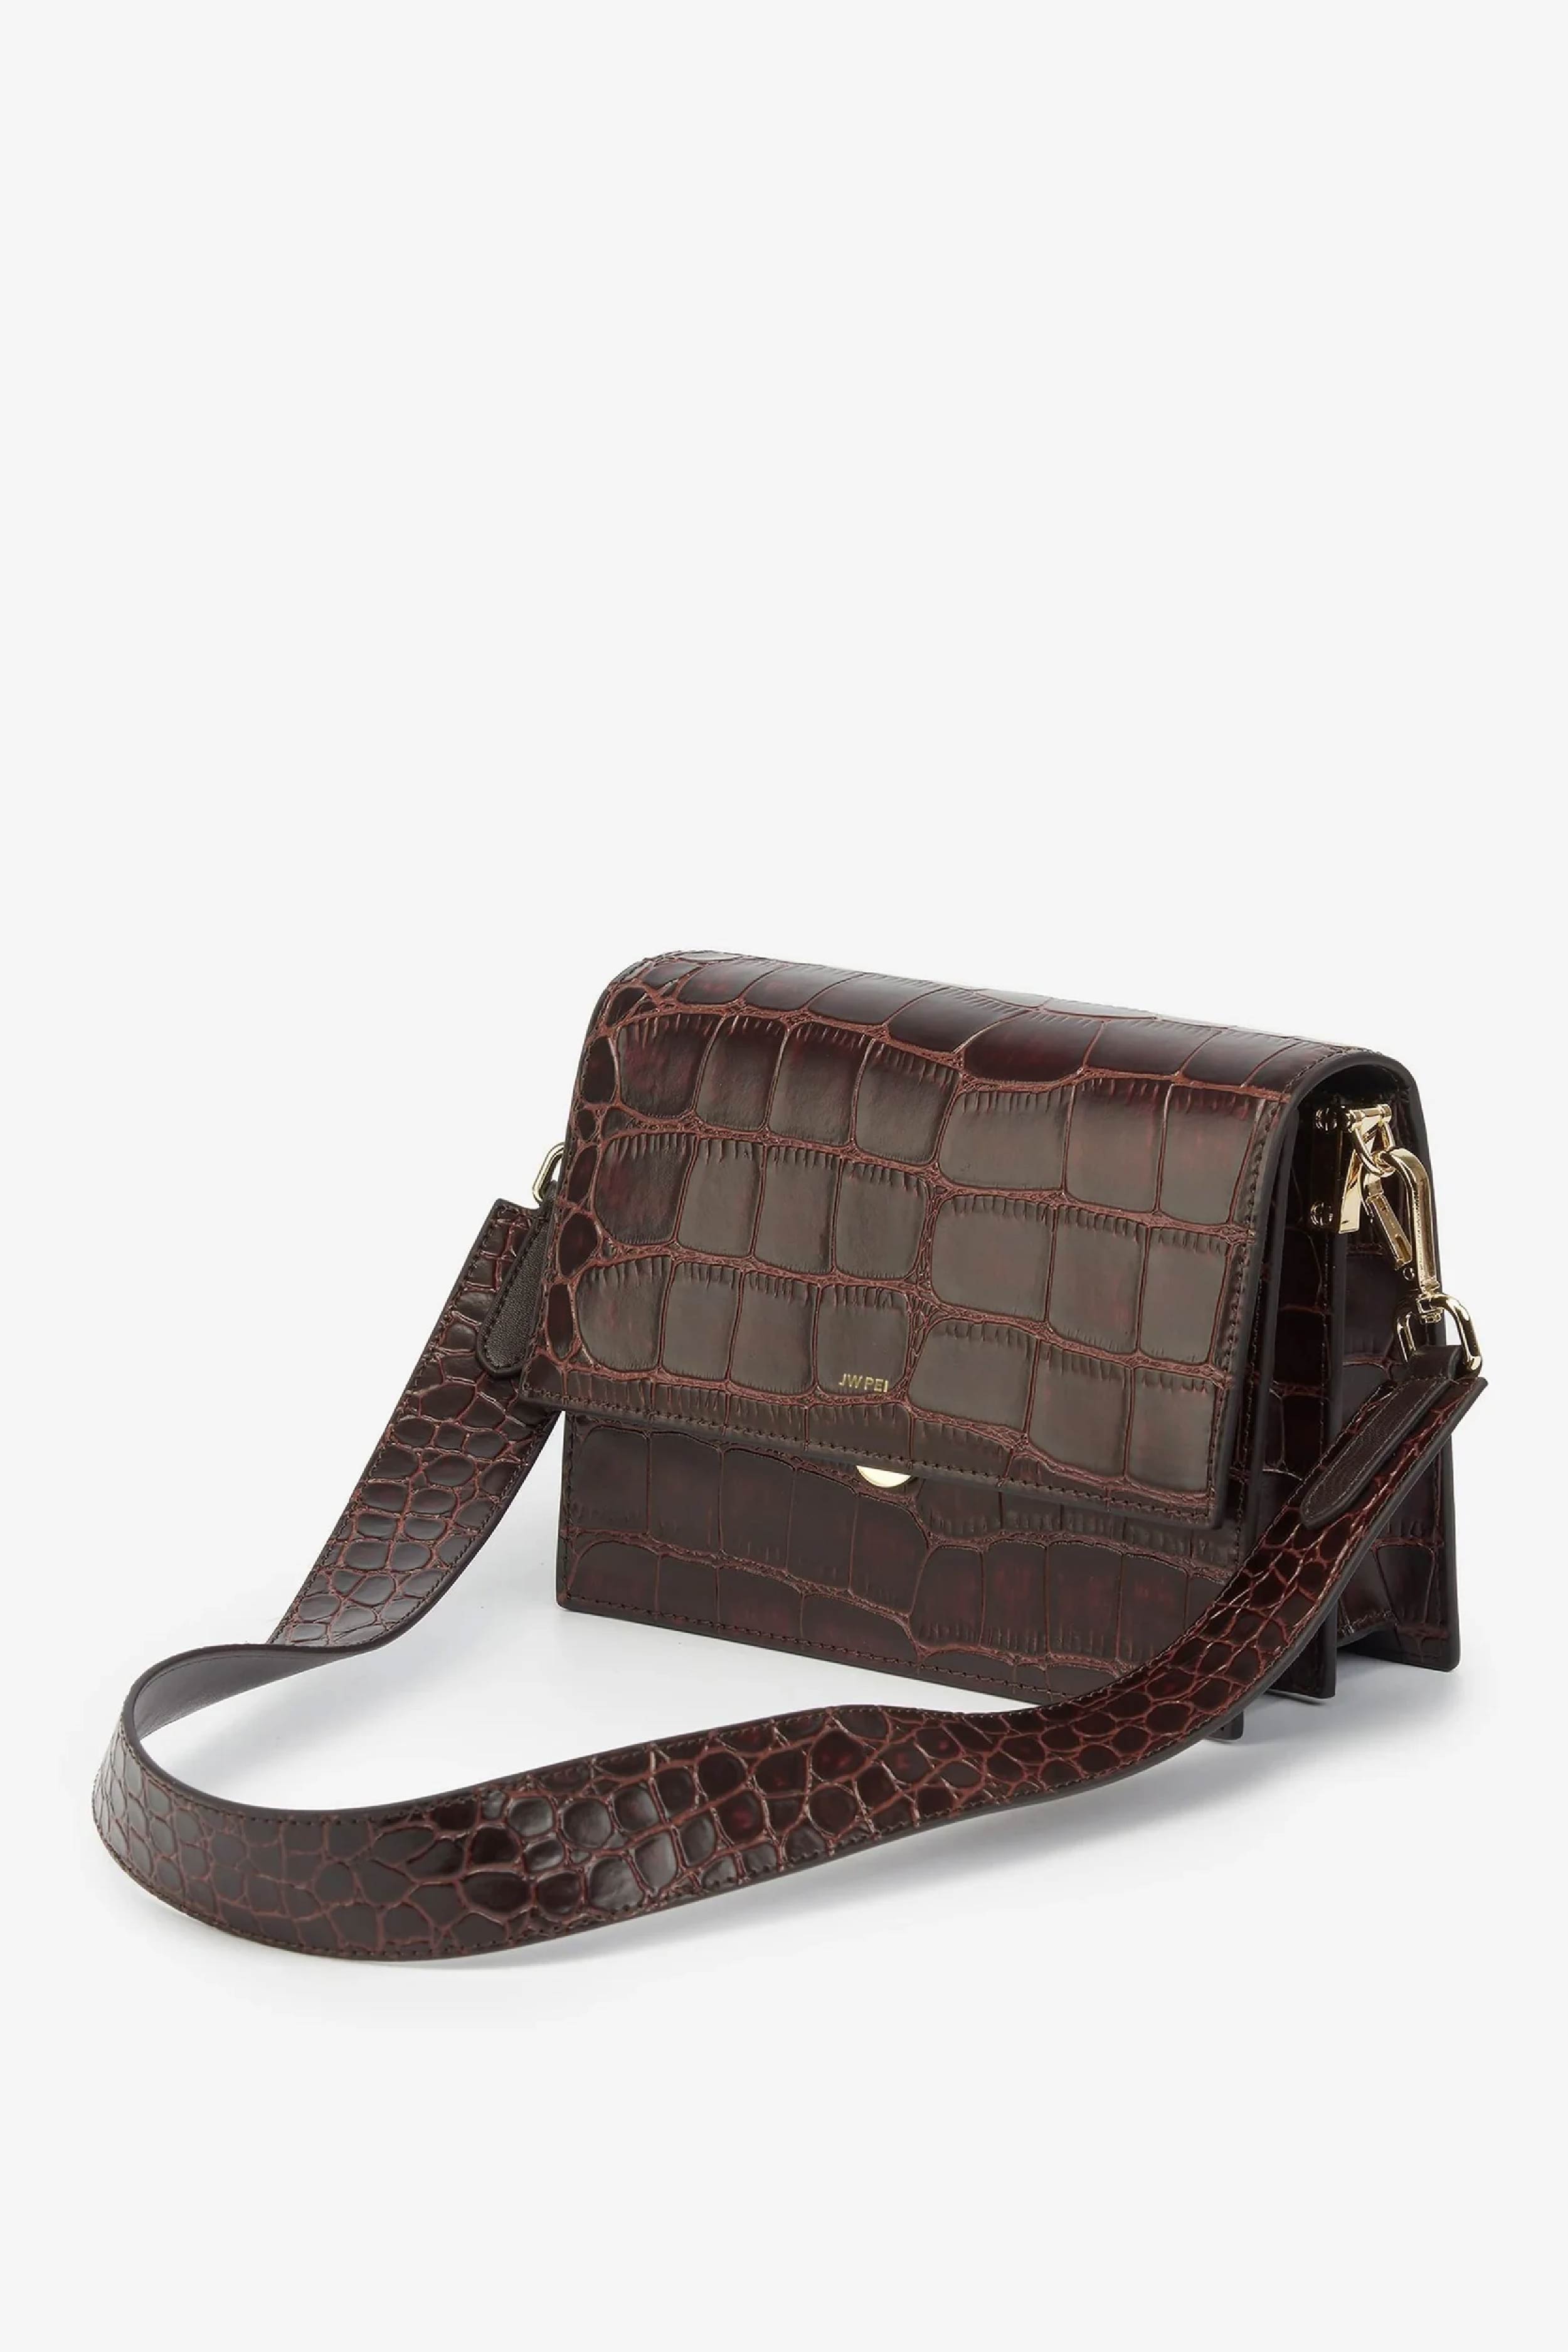 JW PEI Eva Shoulder Bag Vegan Crocodile-Look Leather EXCELLENT CONDITION!!